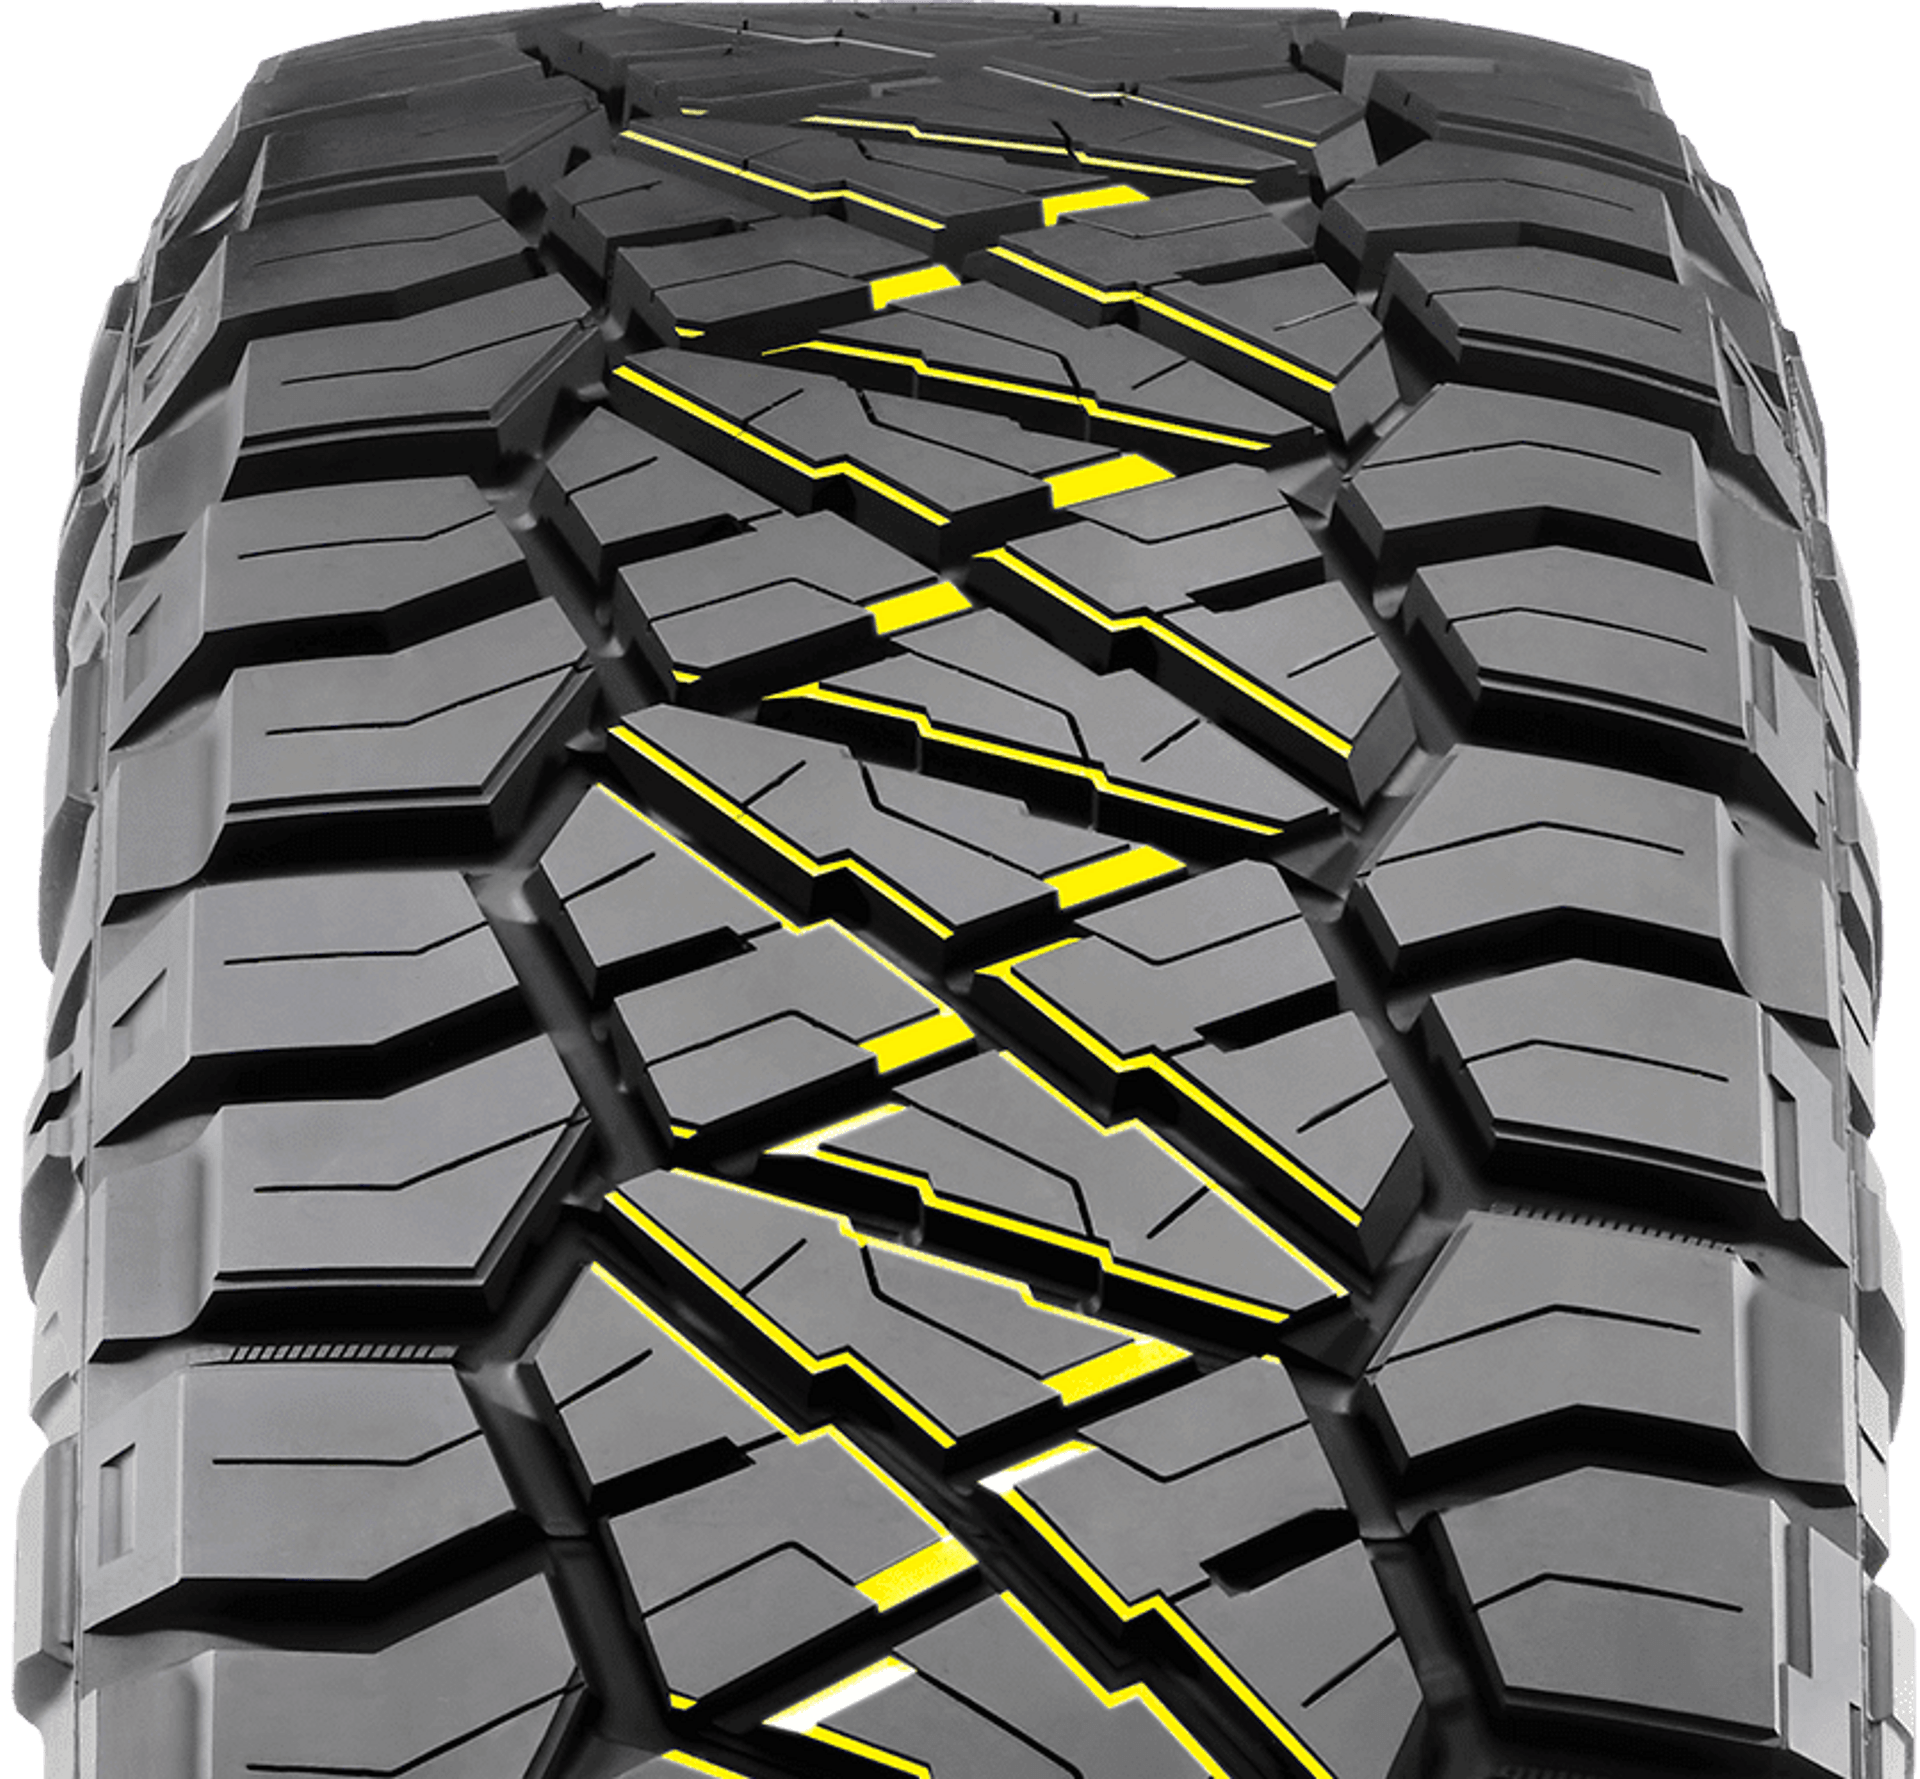 Ridge Grappler Hybrid Terrain Tire Nitto